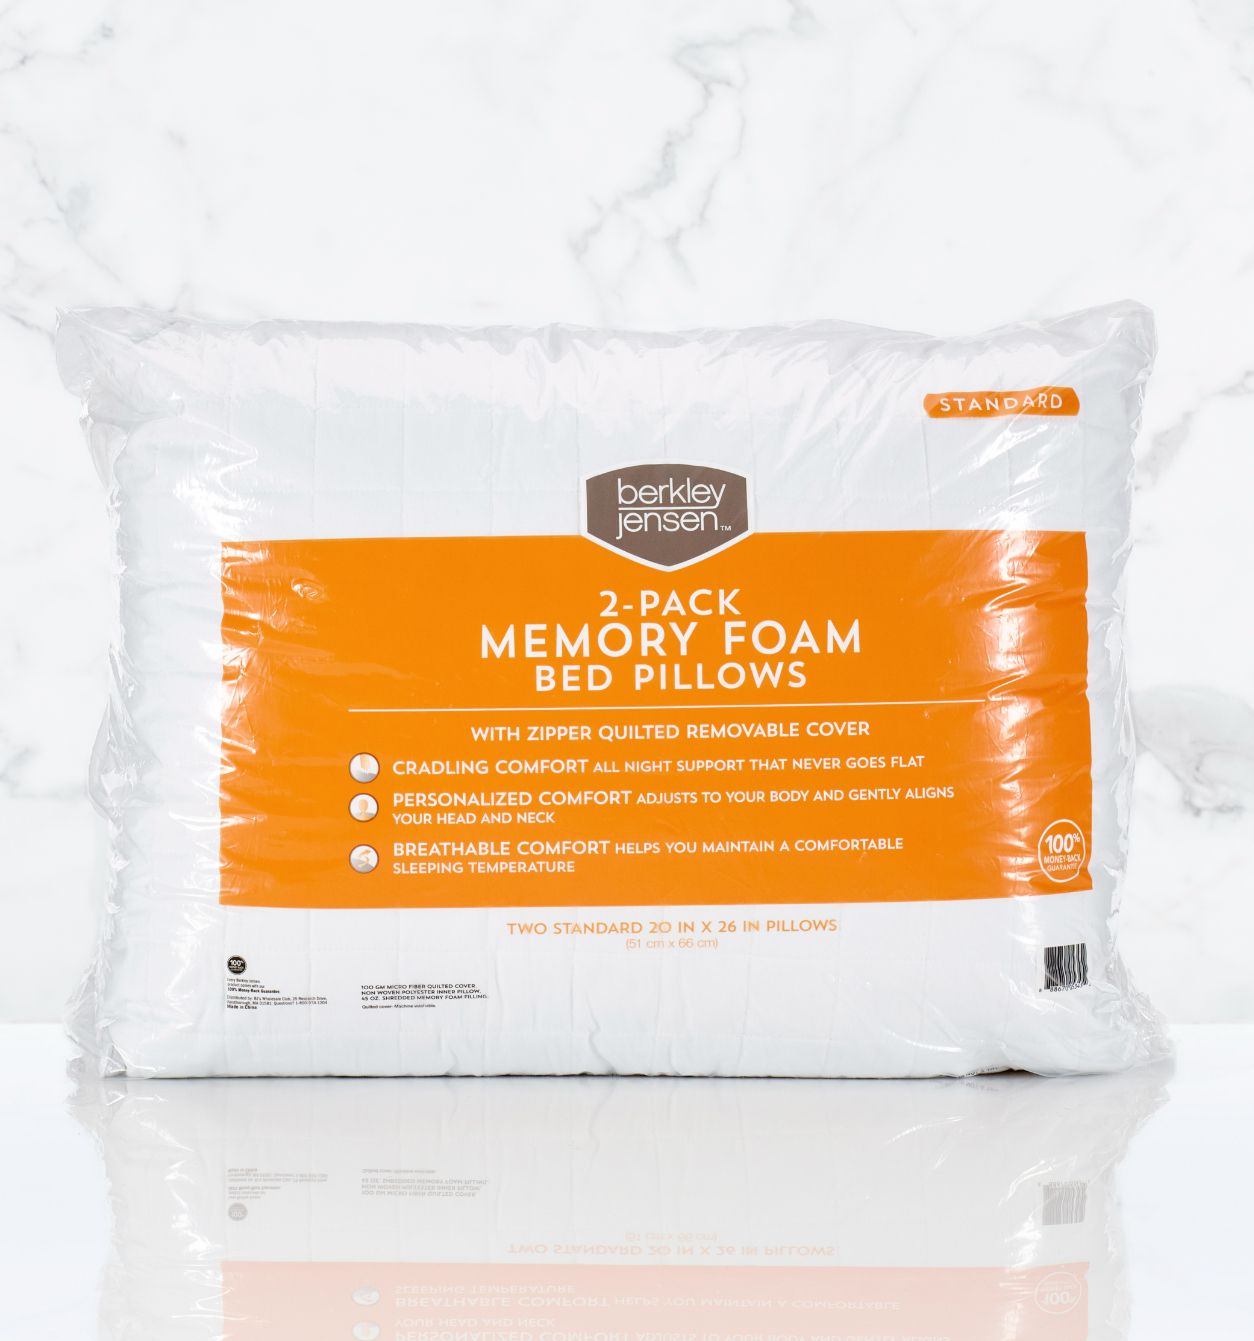 photo of berkley jensen 2-pack memory foam bed pillows on marble